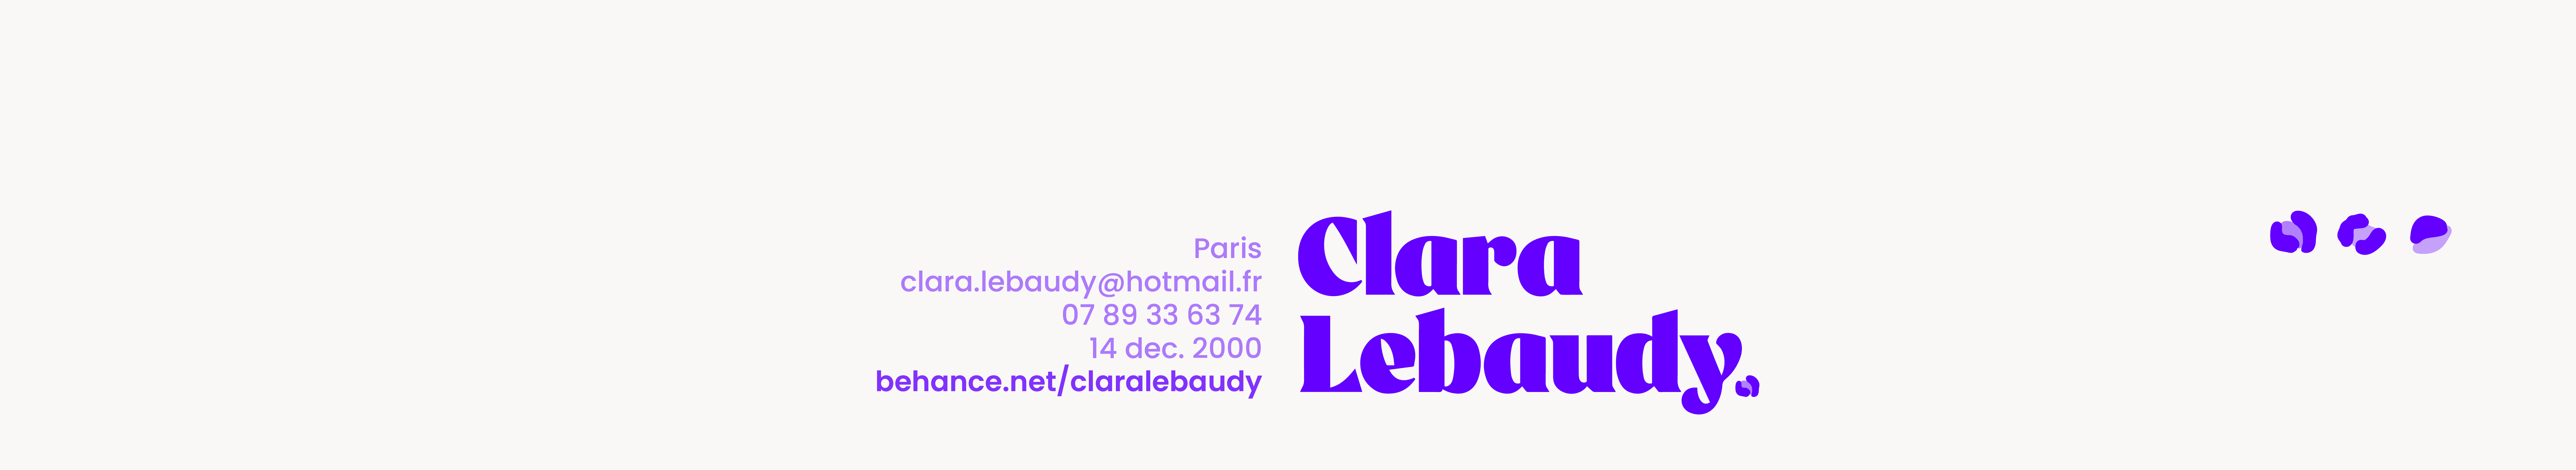 Bannière de profil de Clara LEBAUDY